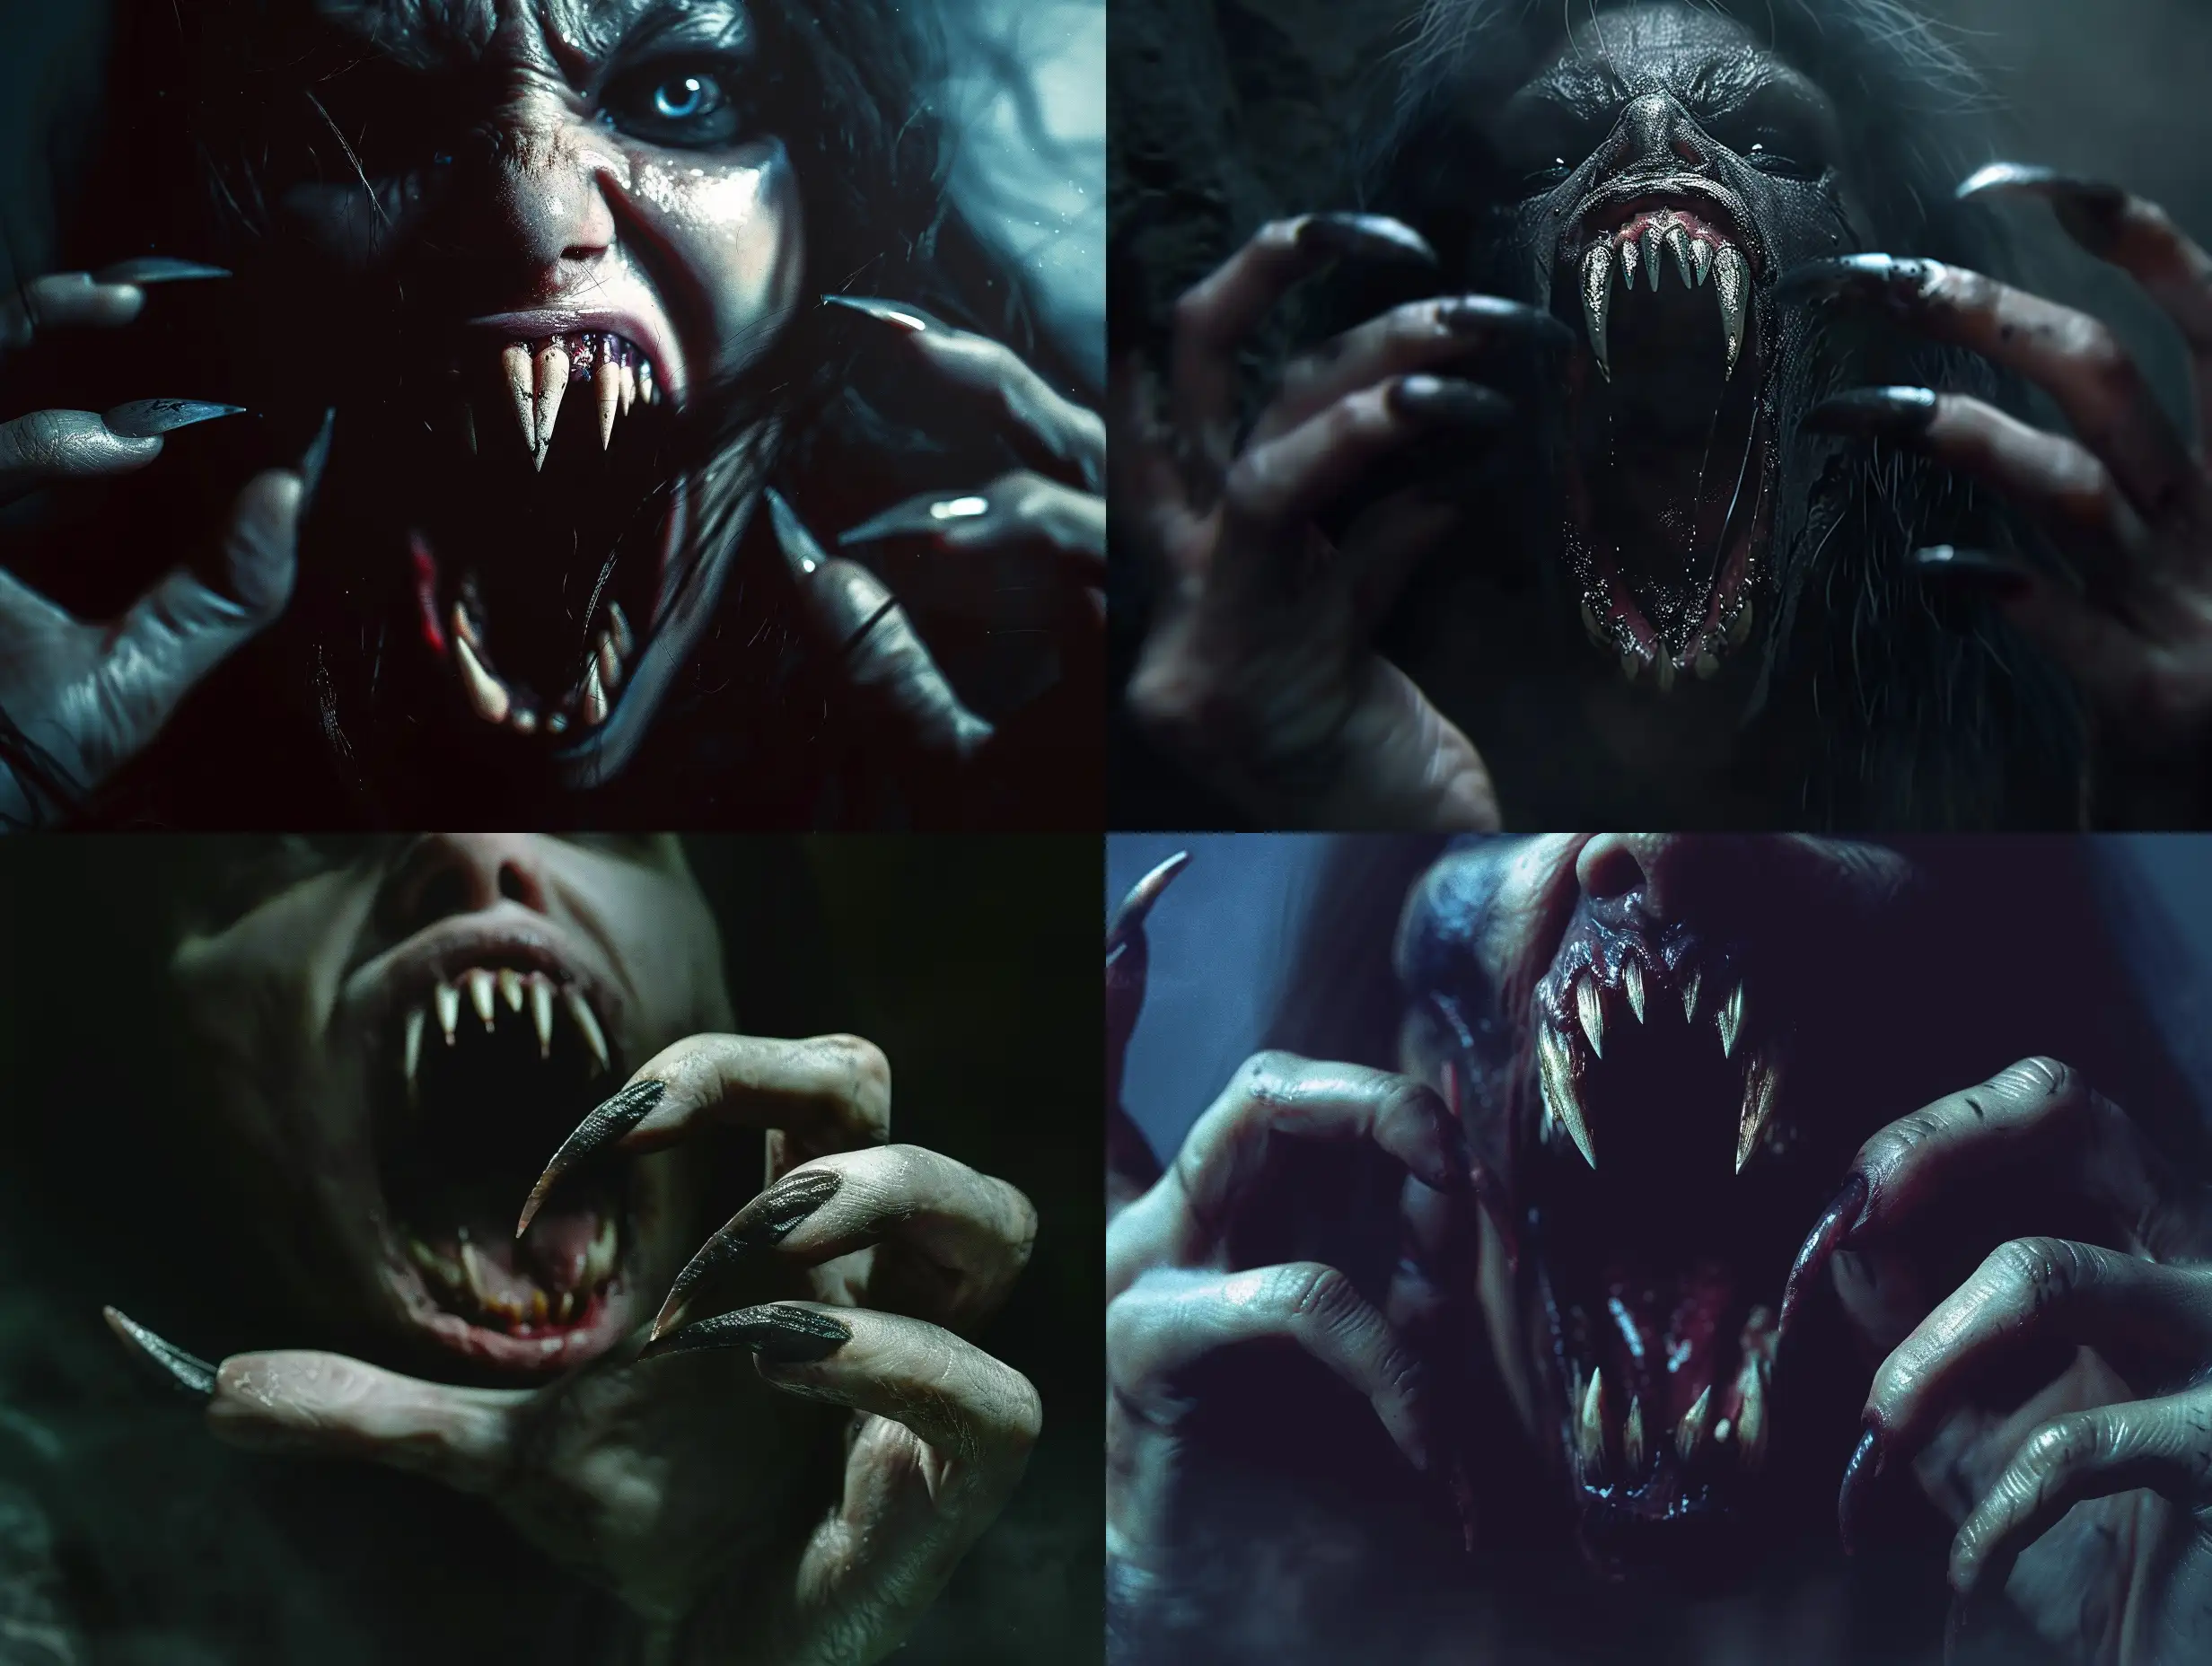 Nightmare-Vampire-Woman-Emerging-from-Darkness-with-Menacing-Fangs